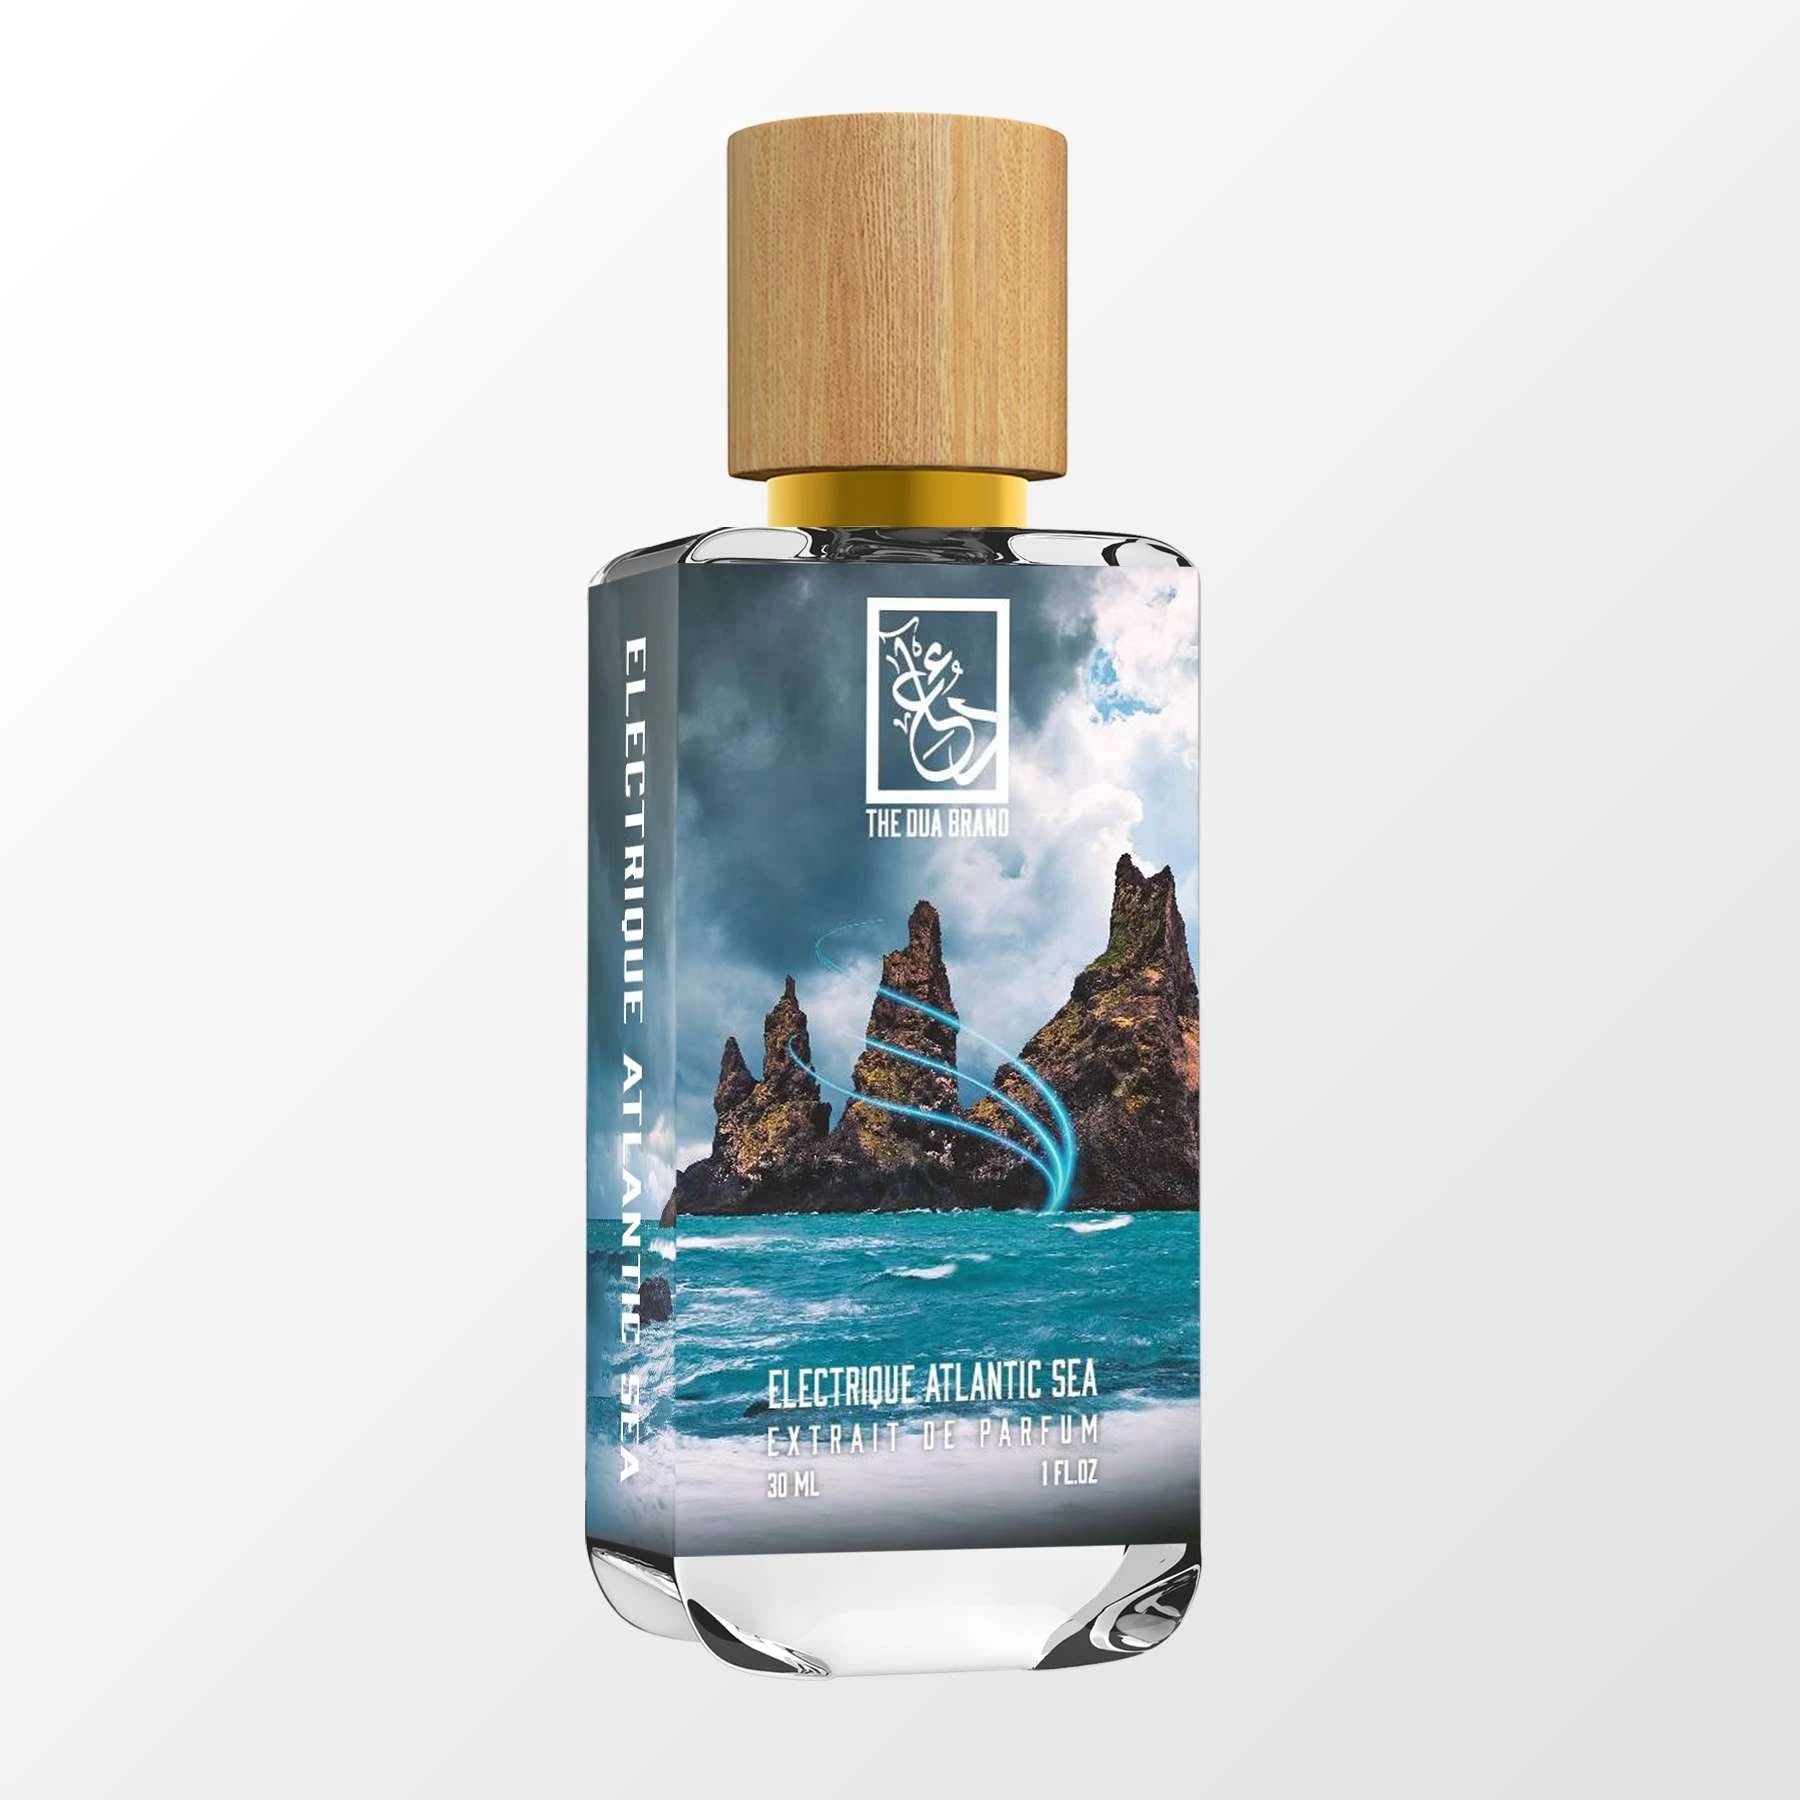 Electrique Atlantic Sea - DUA FRAGRANCES - Aromatic Aquatic - Masculine  Perfume - 34ml/1.1 FL OZ - Extrait De Parfum